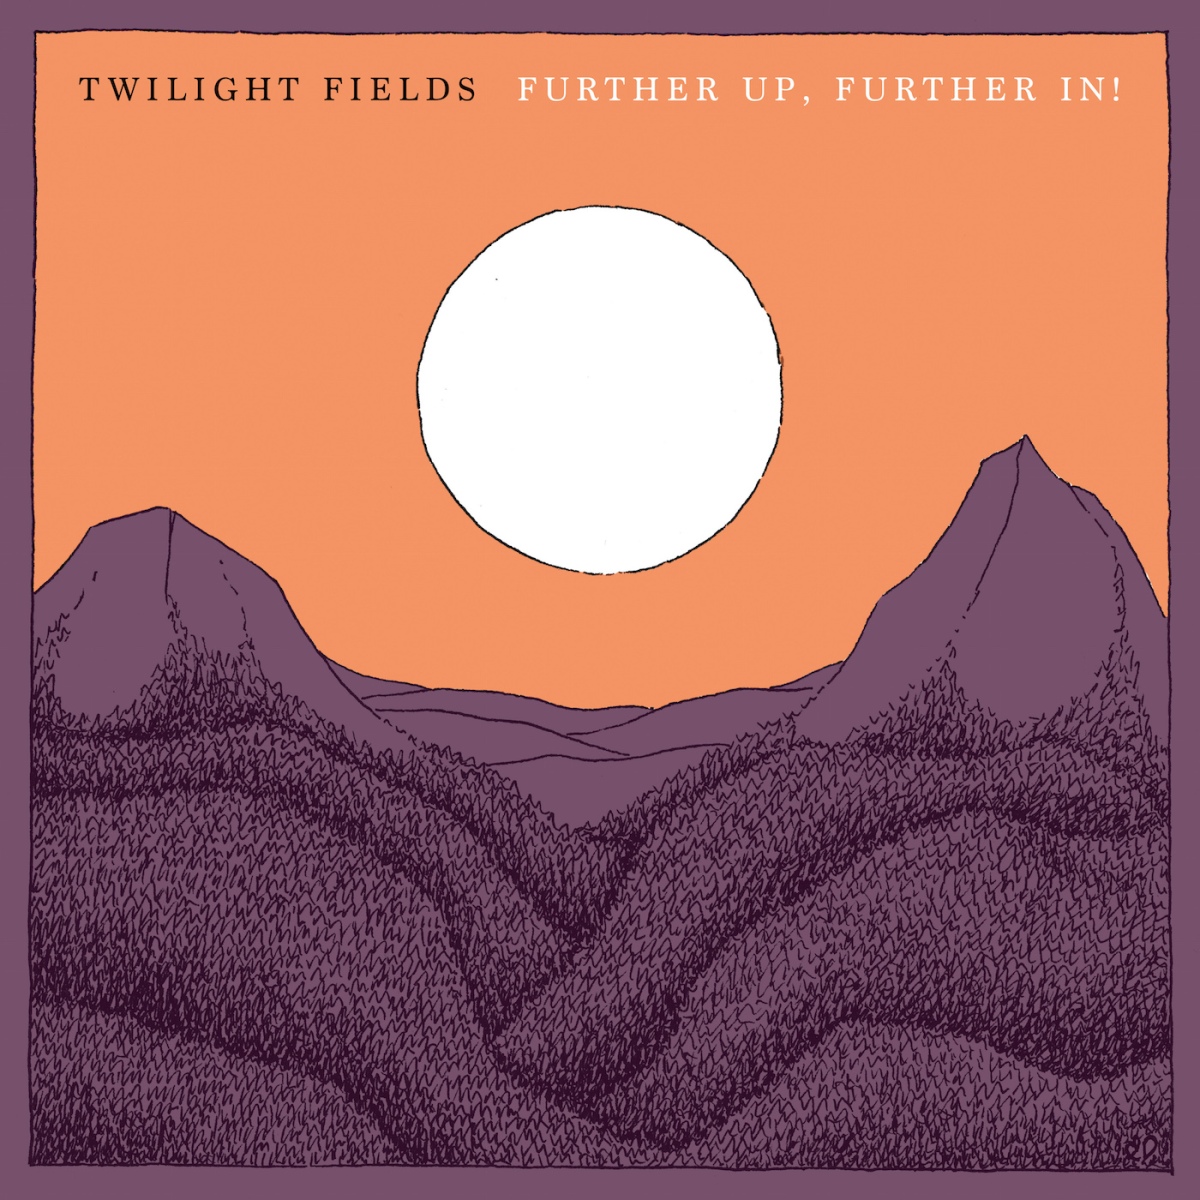 Twilight fields Micus. Fields at Nightfall. Album Covers in field. Zara fields at Nightfall. Further fields